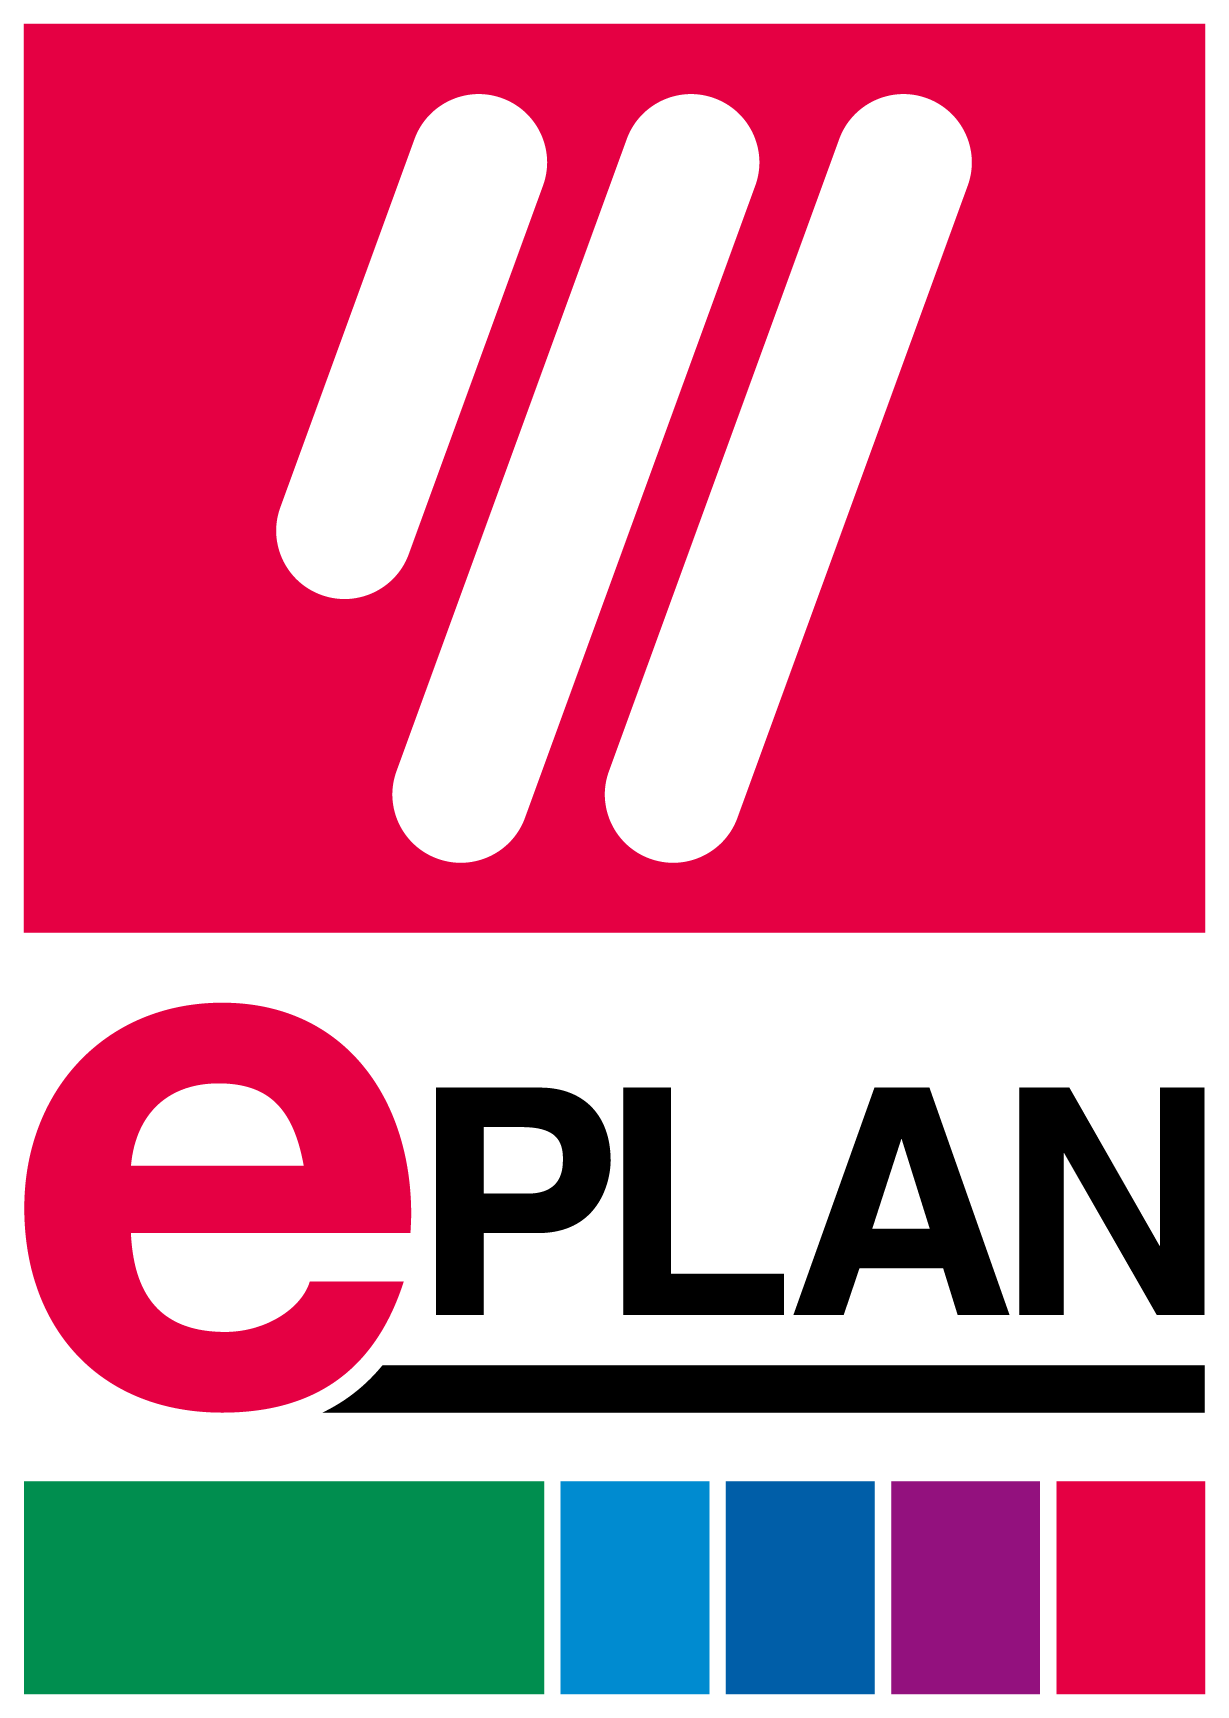 EPLAN Software & Services 株式会社